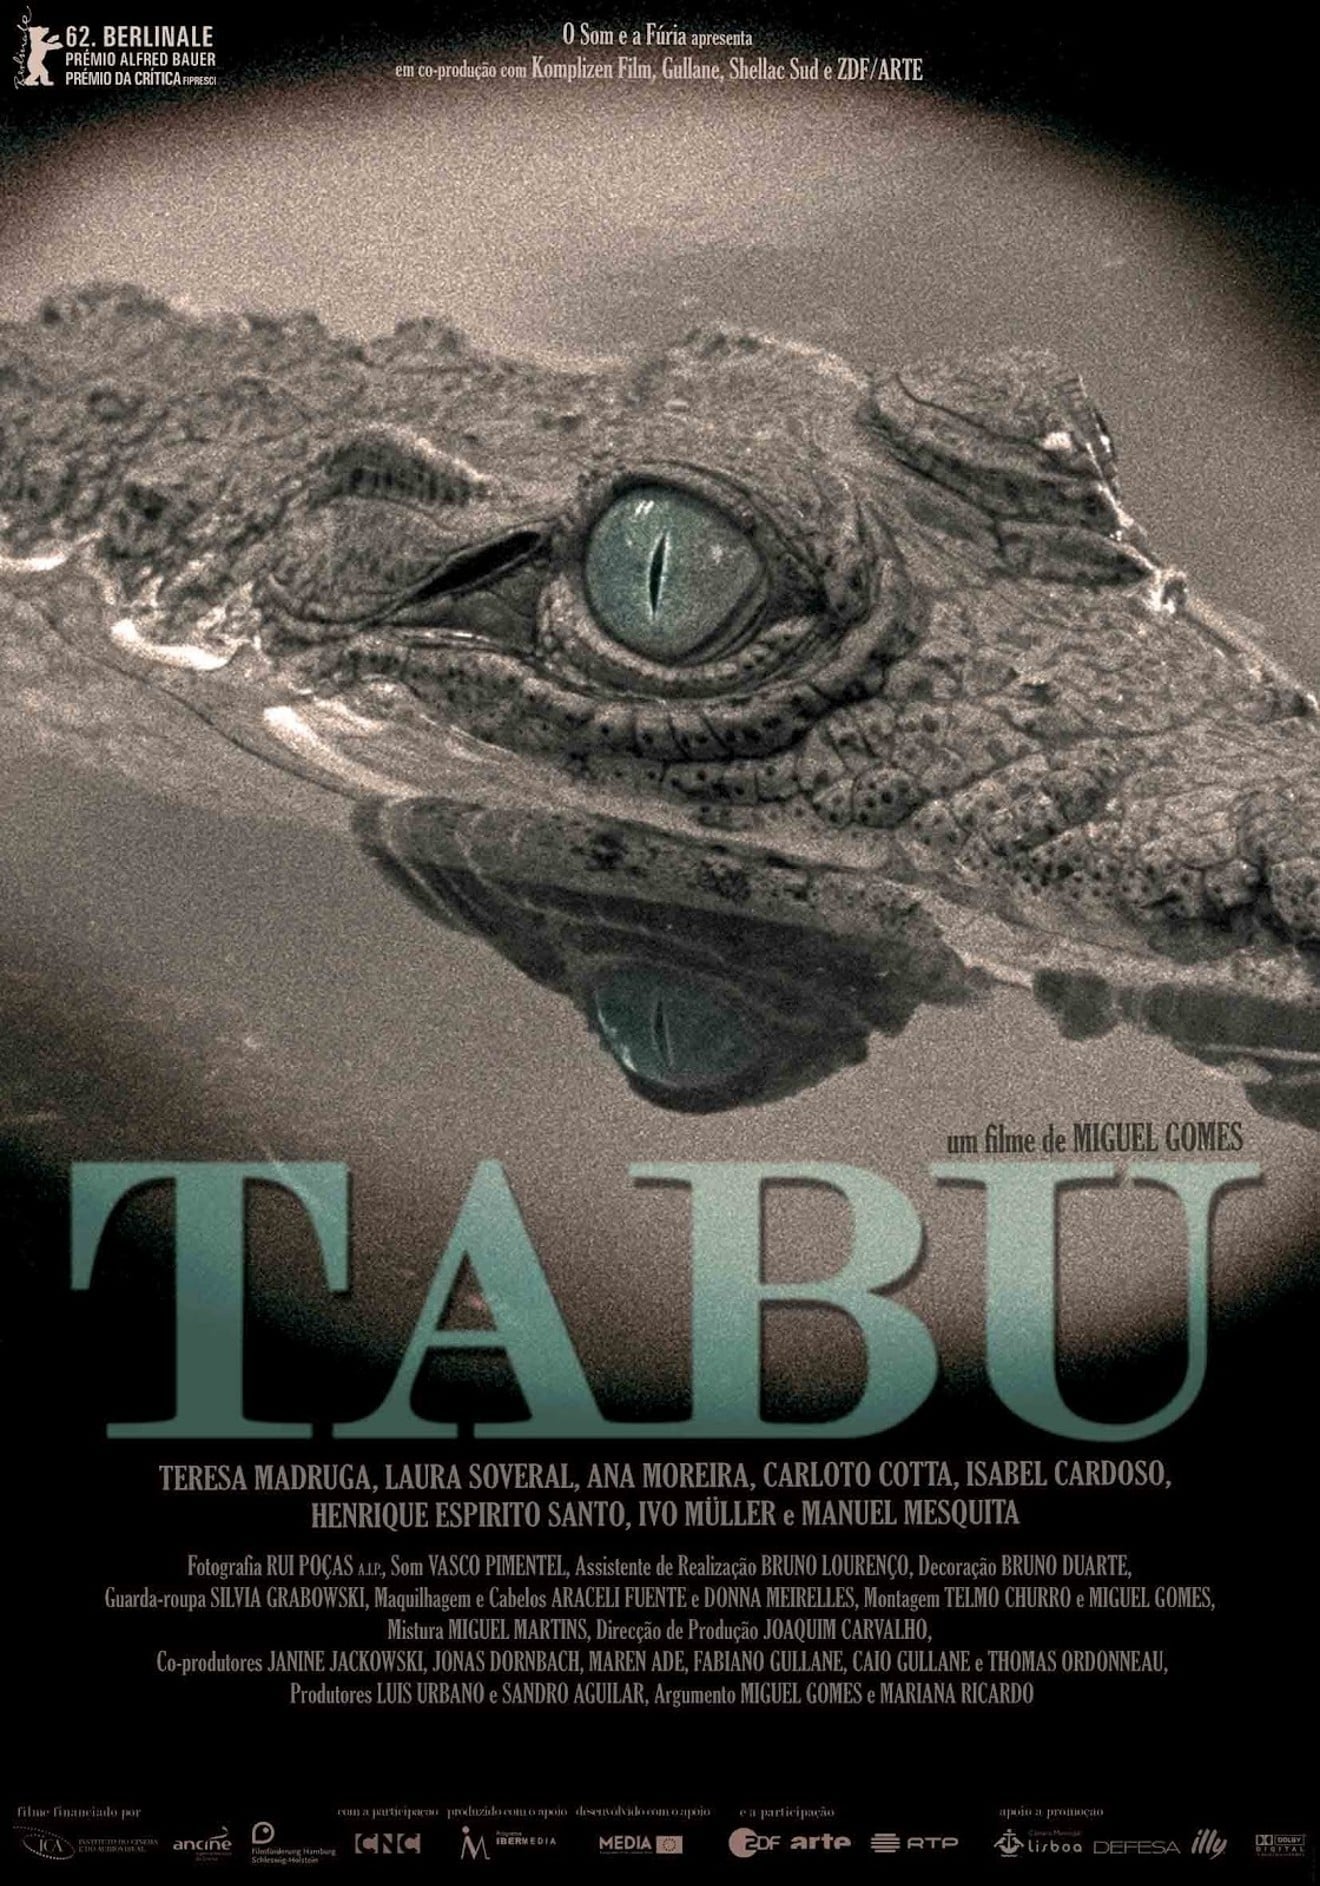 Tabu poster